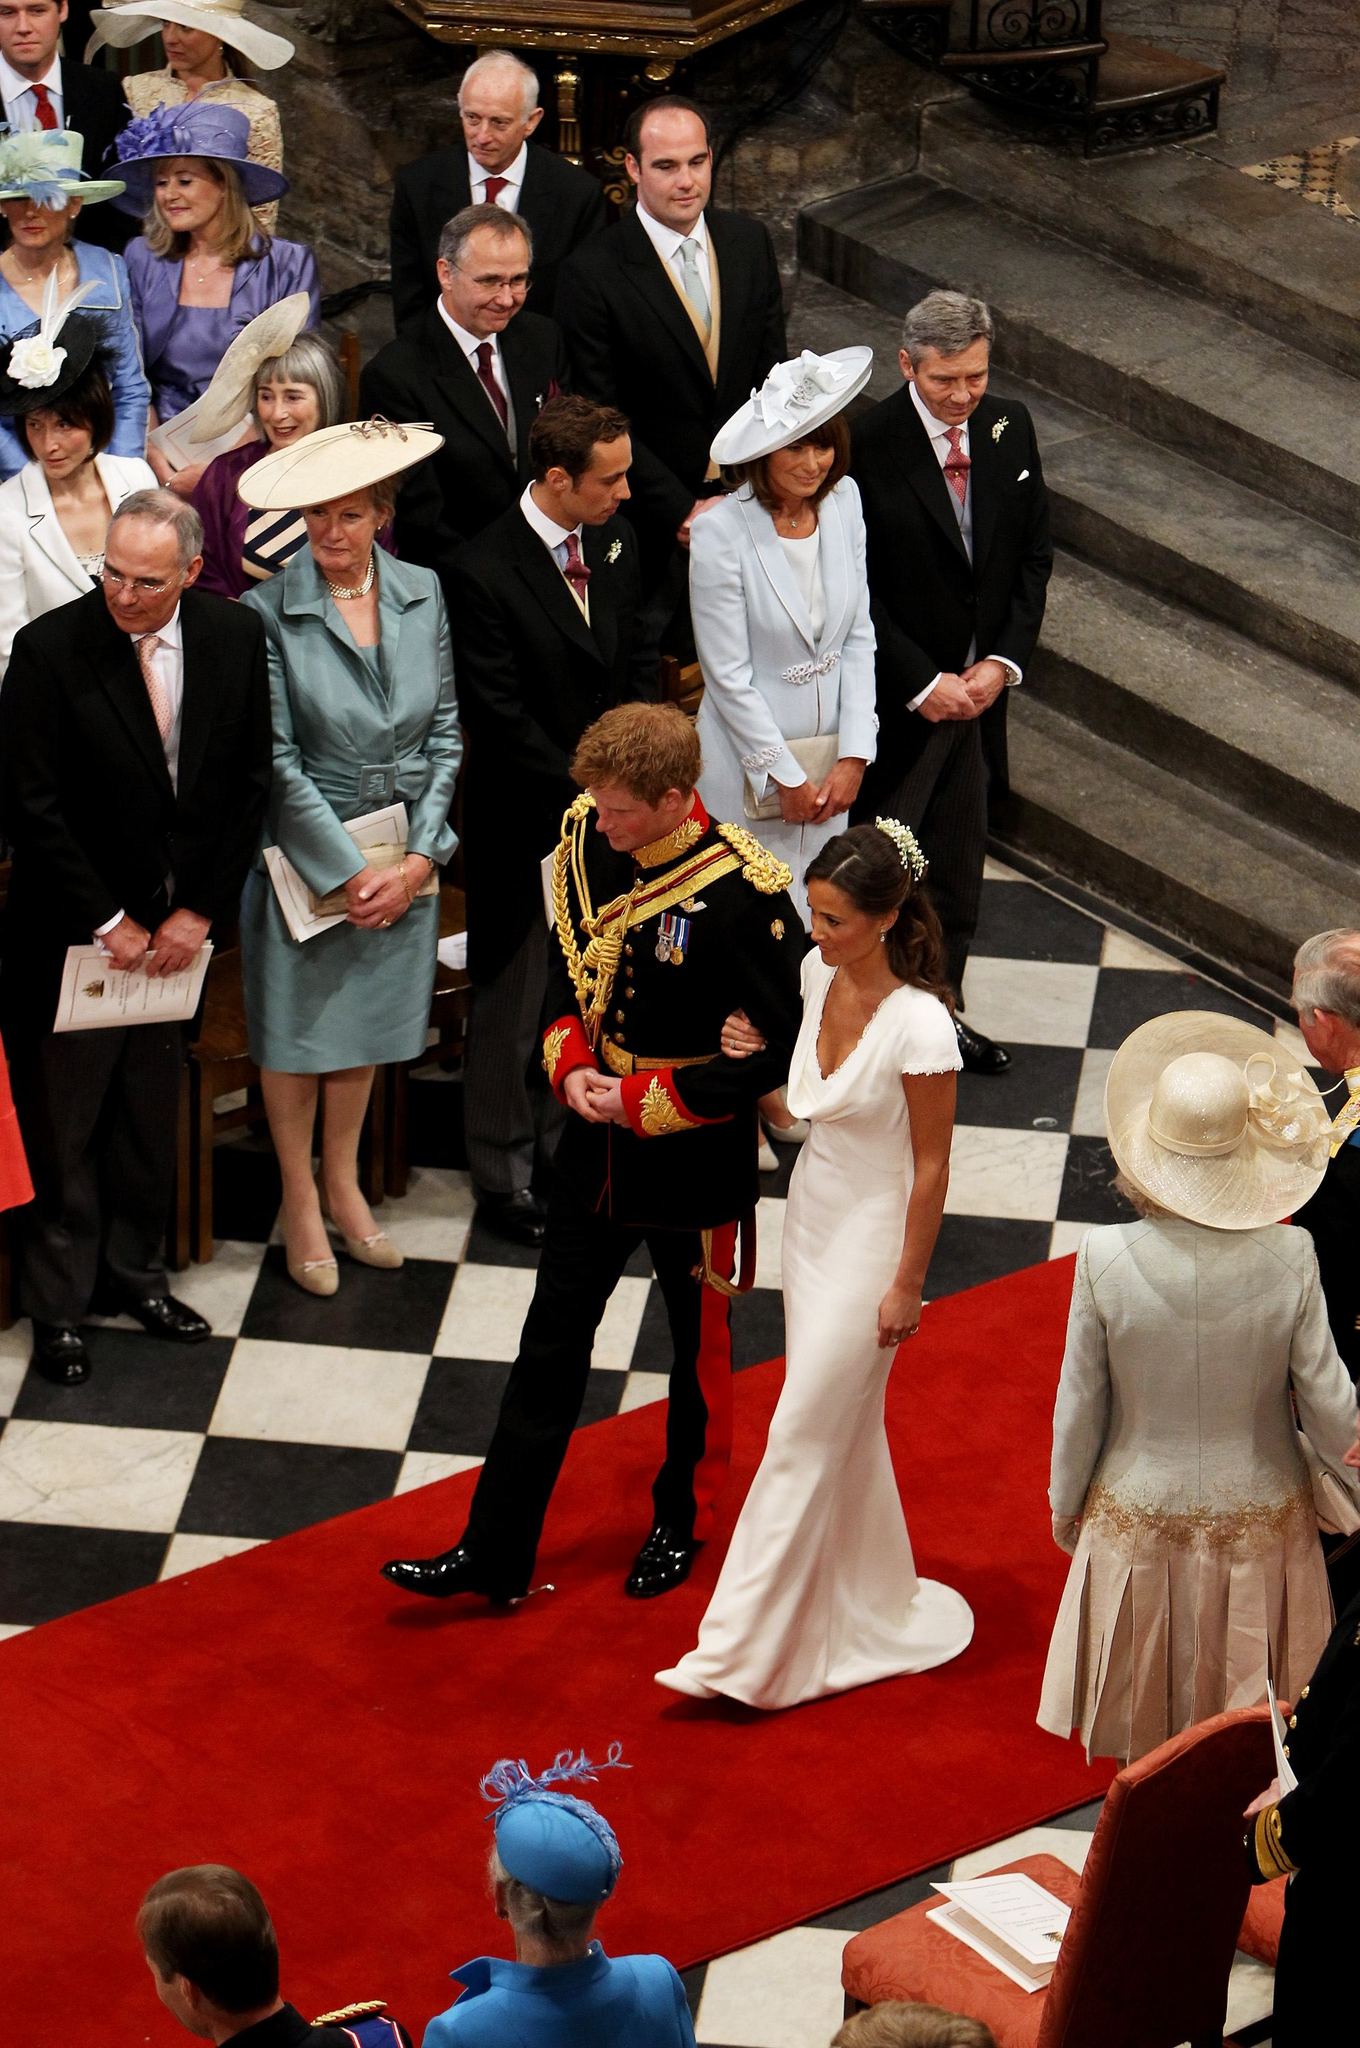 Prince Harry Windsor, Carole Middleton, Michael Middleton and Pippa Middleton